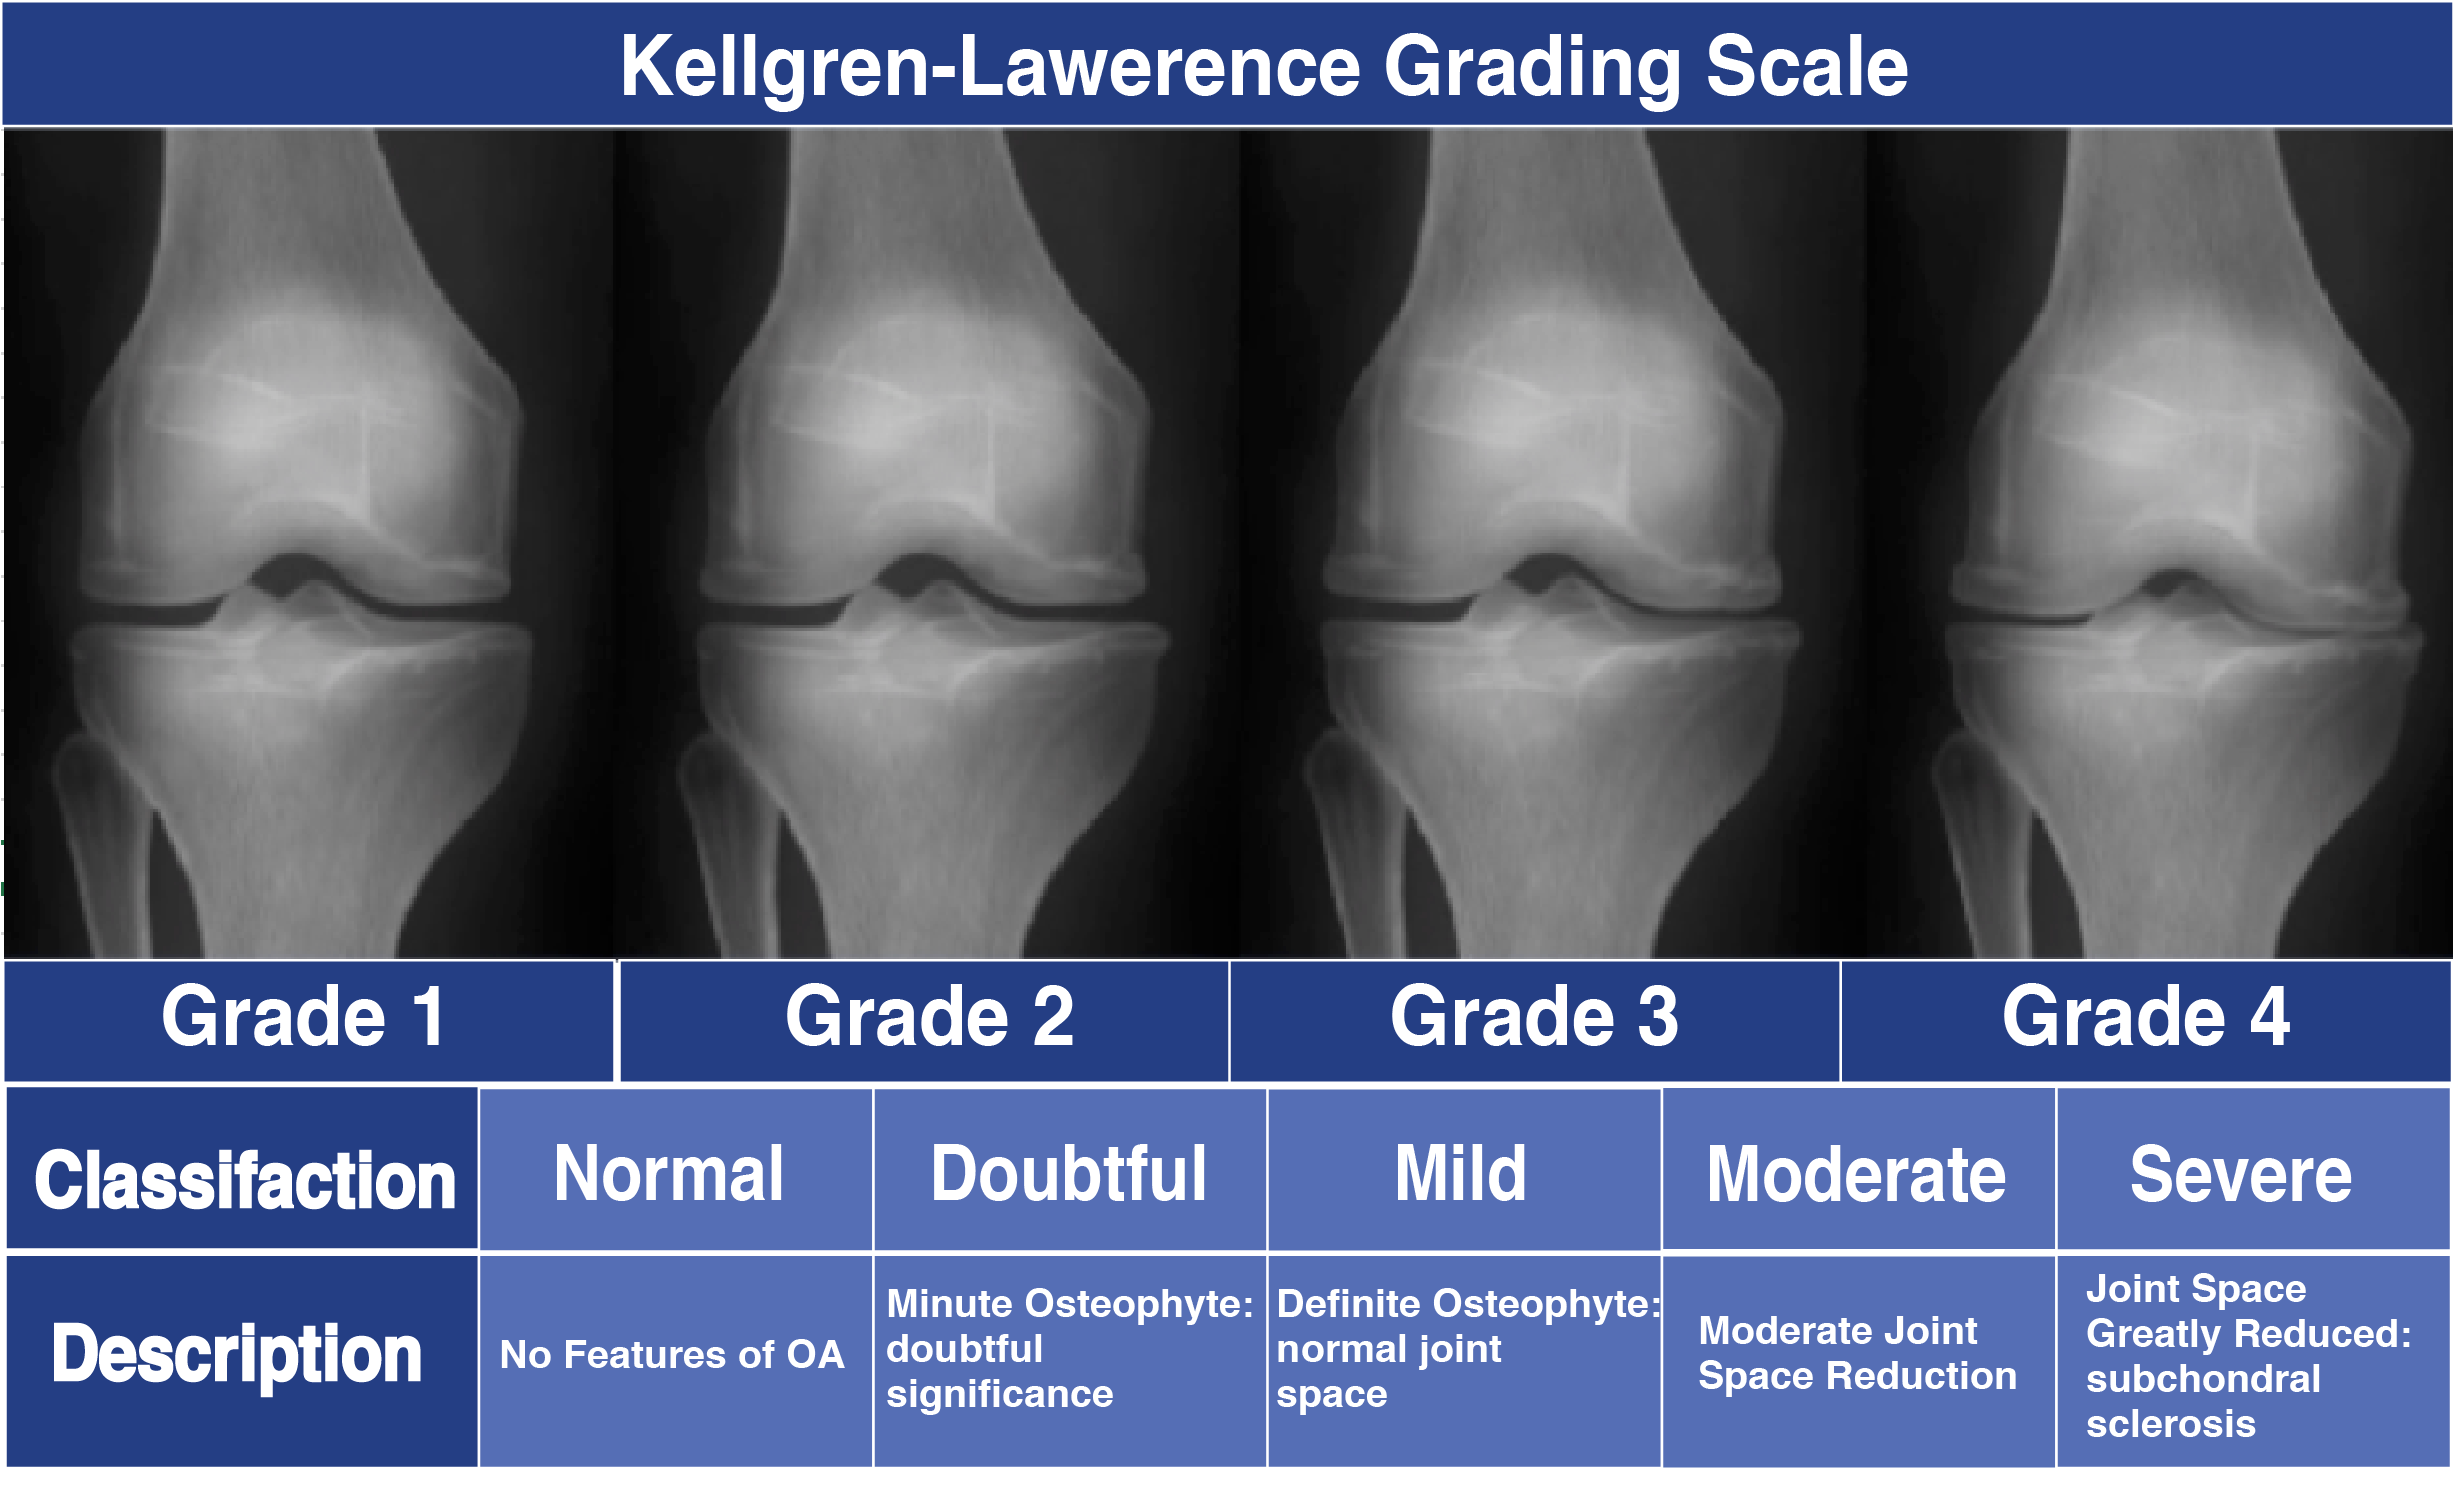 pain pressure threshold knee compartments